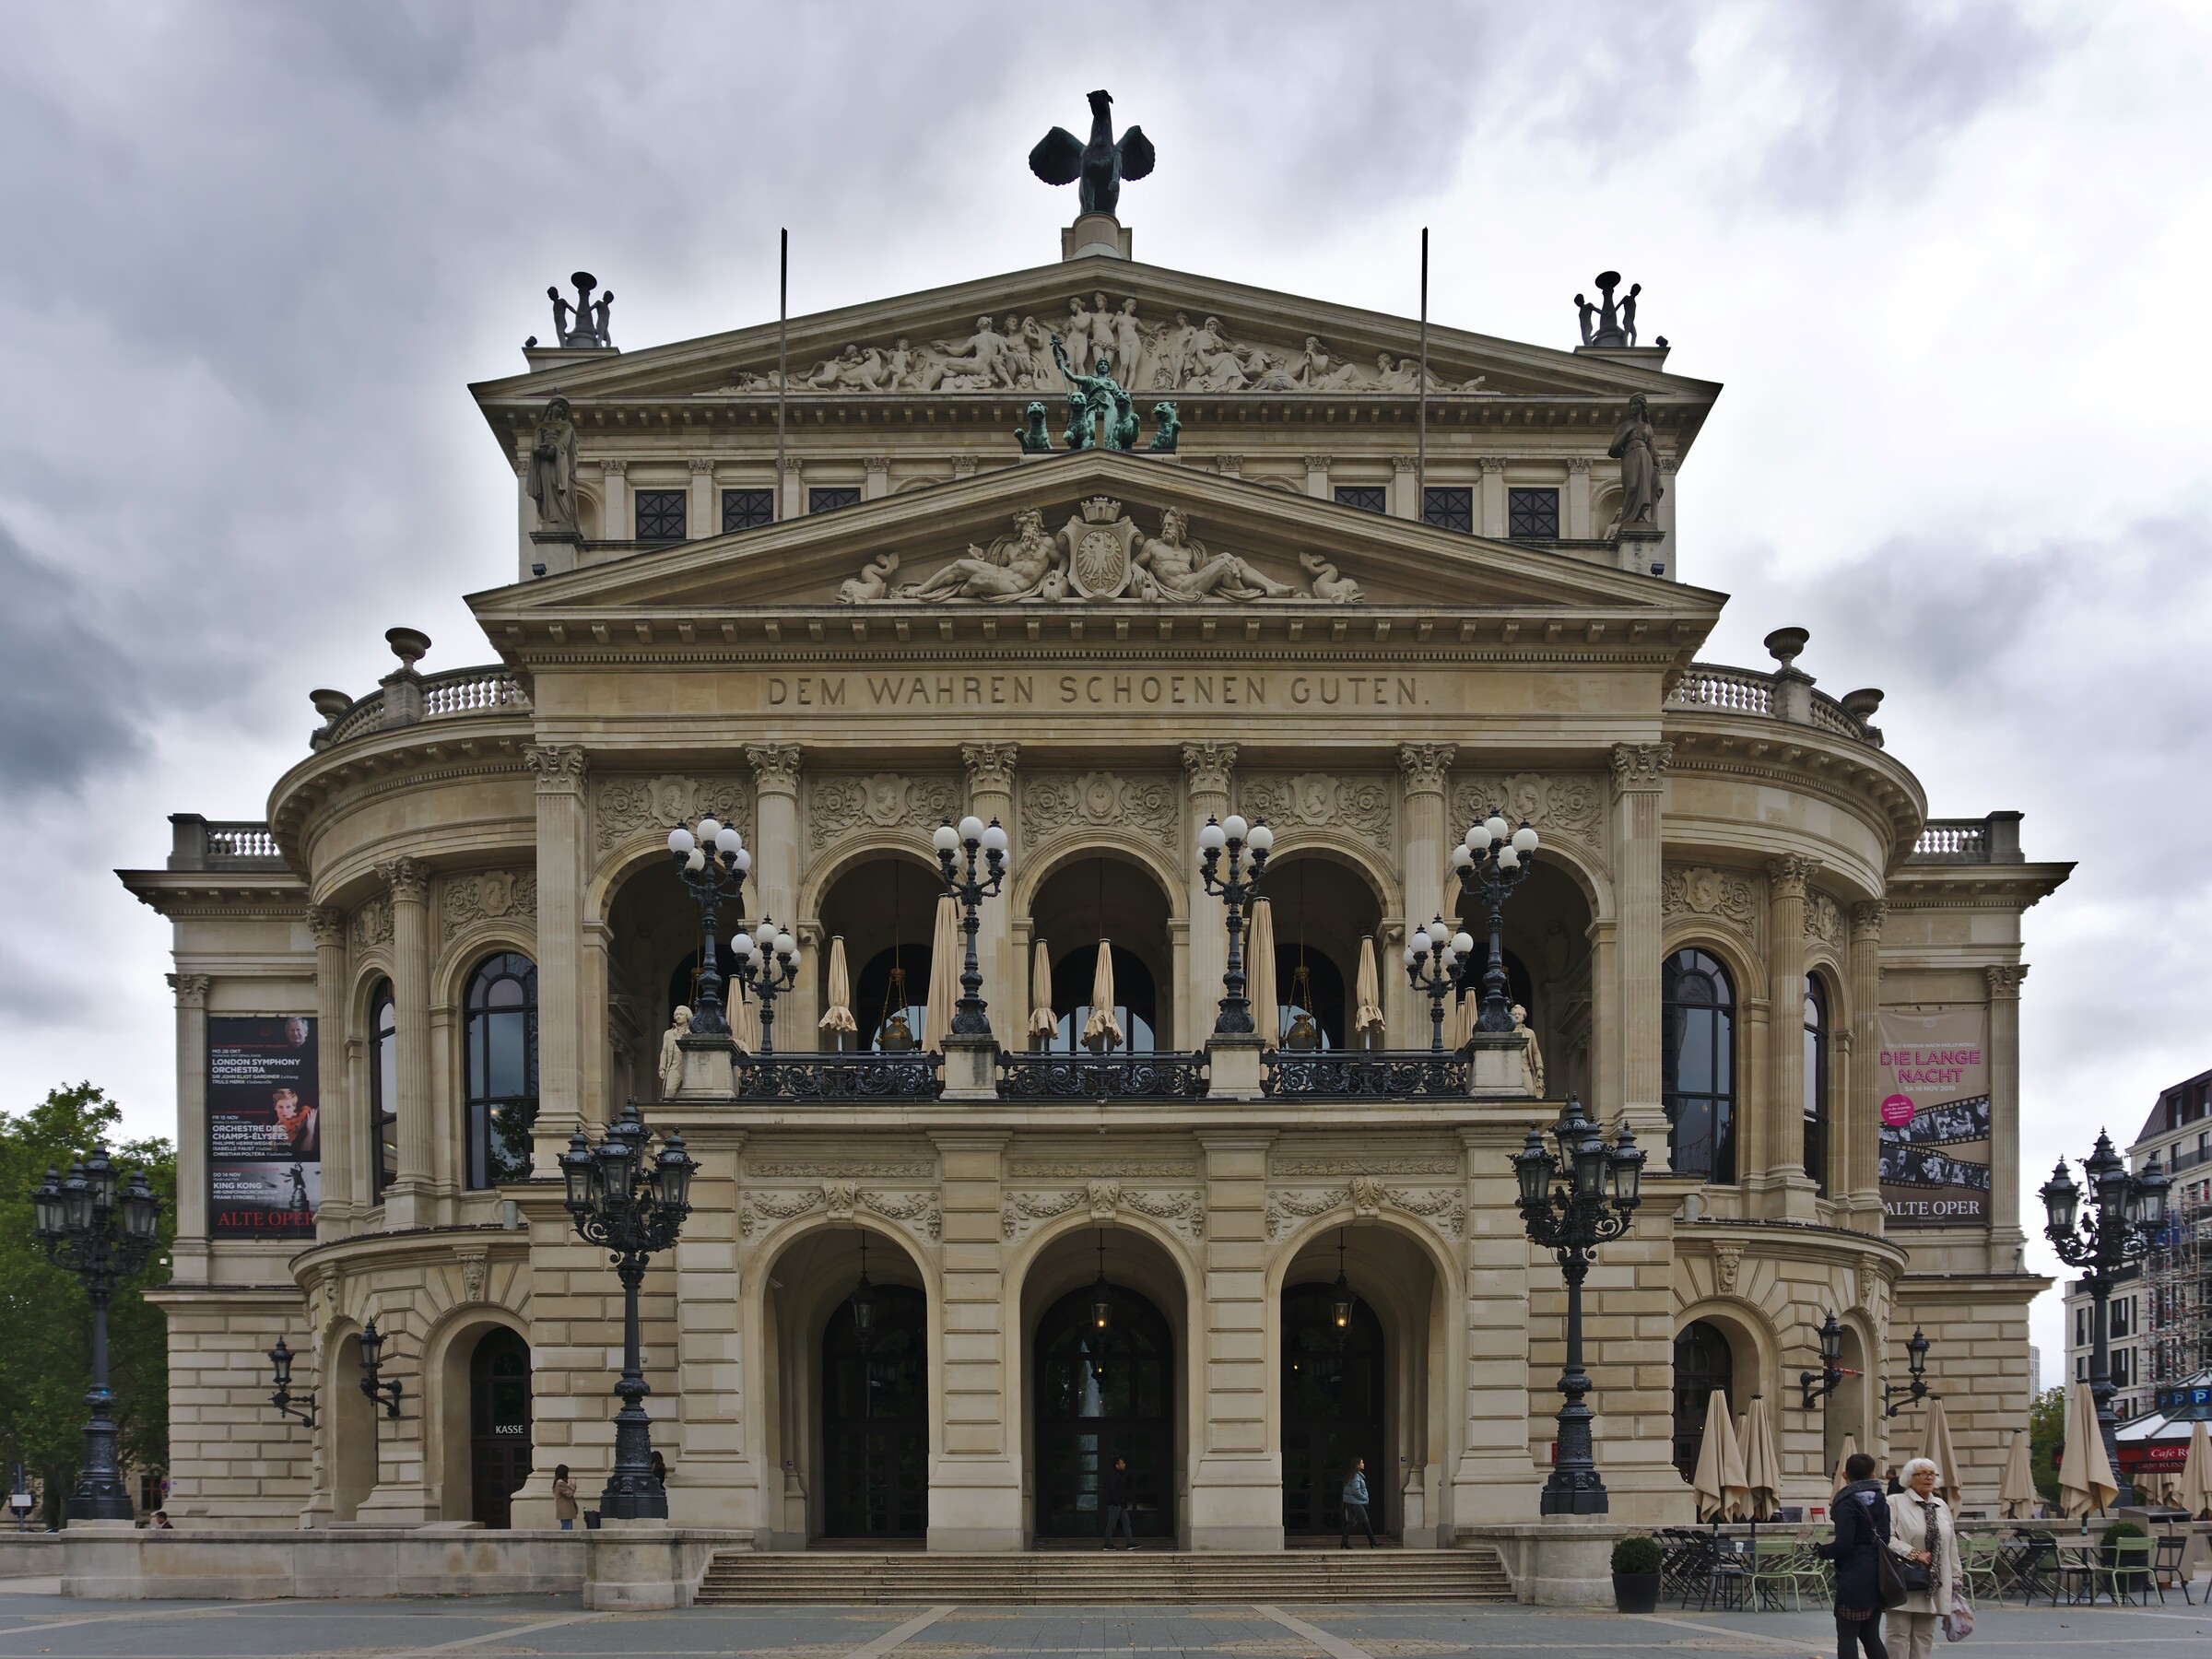 The “Alte Oper” (old opera).